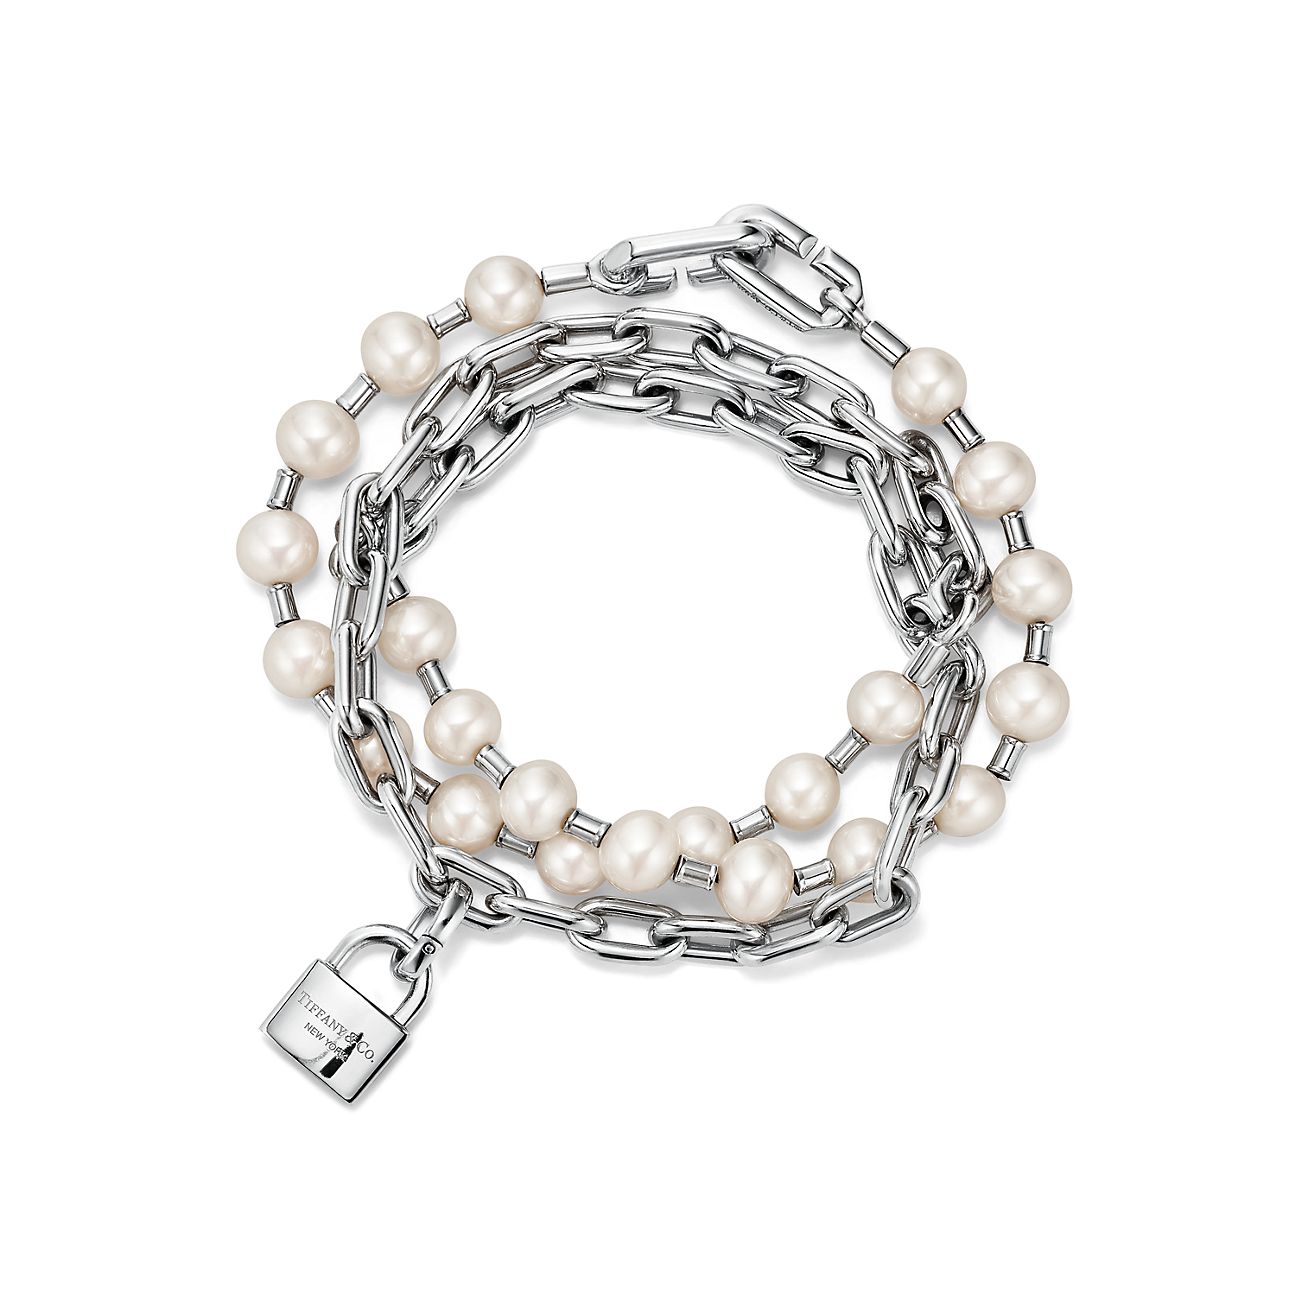 The Tiffany Lock - Adding a full pave diamond bracelet to my stack - YouTube